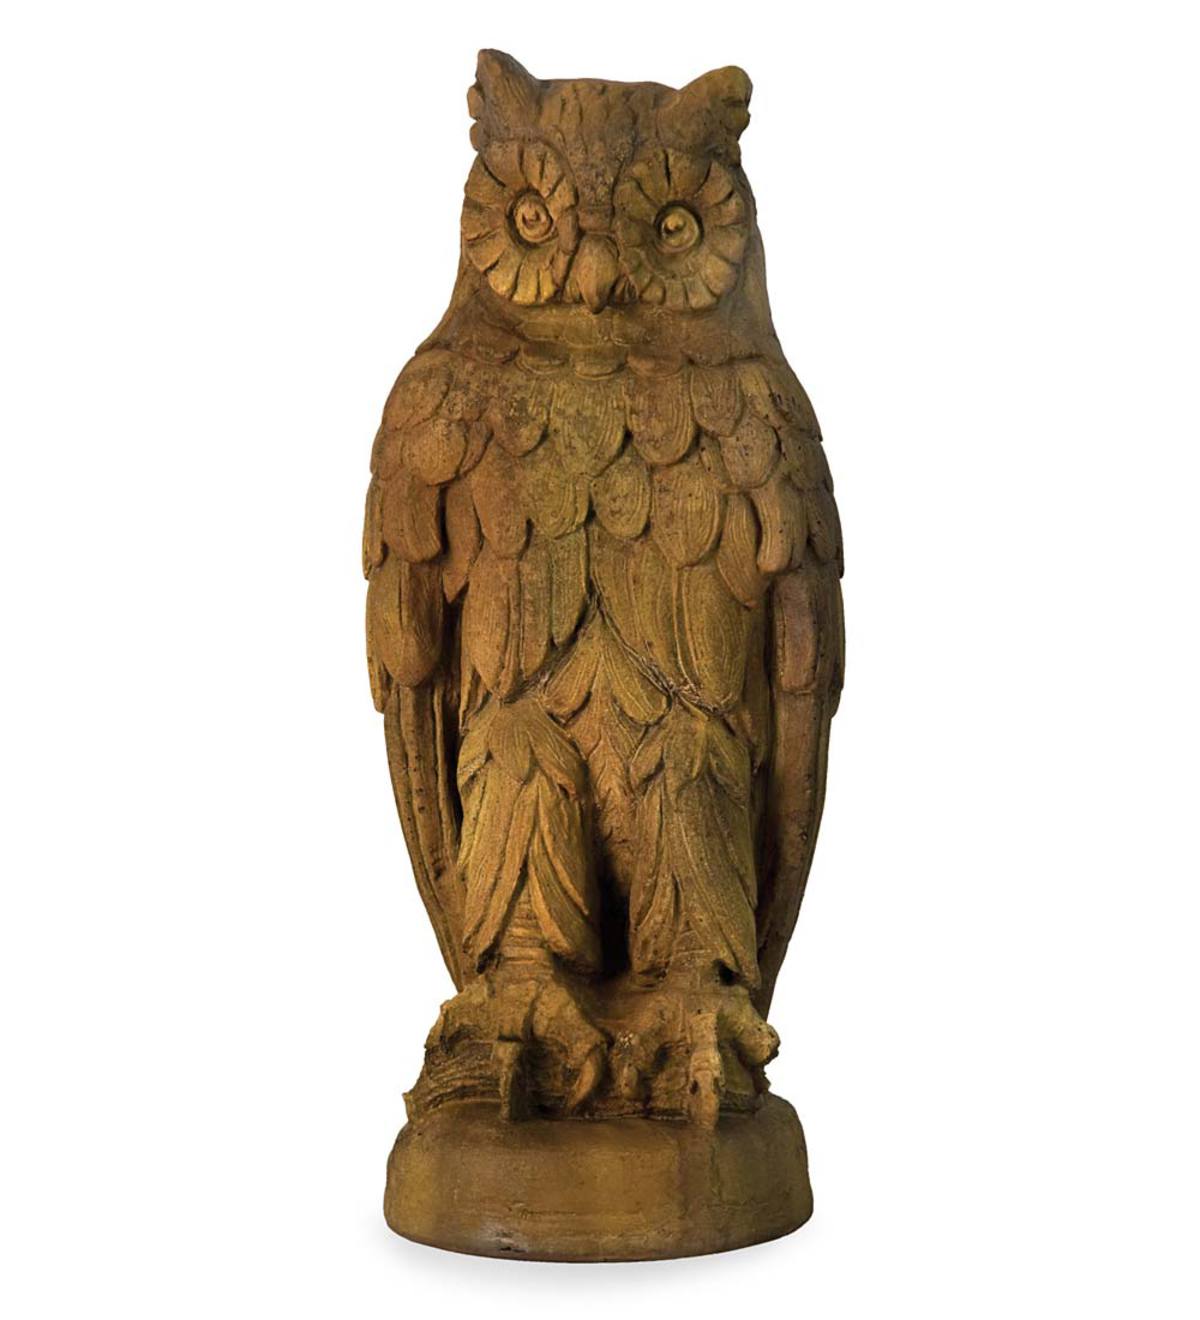 Perched Owl Garden Statue